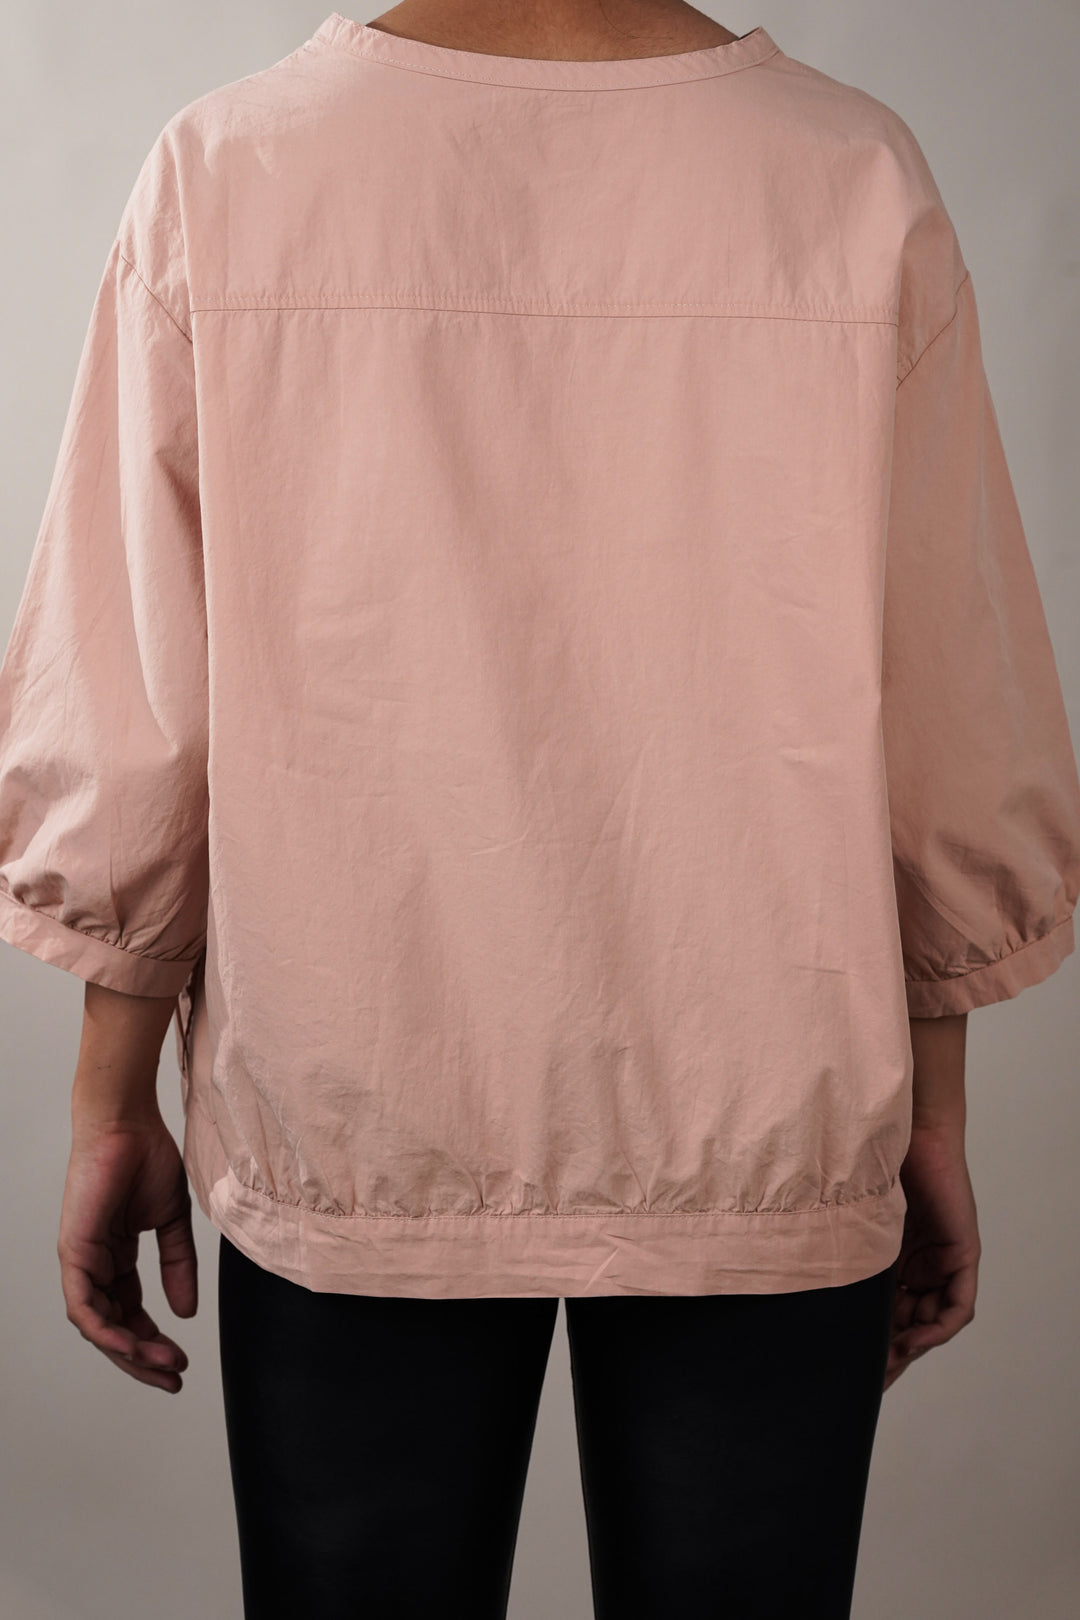 Pastel pink streetwear shirt for summer